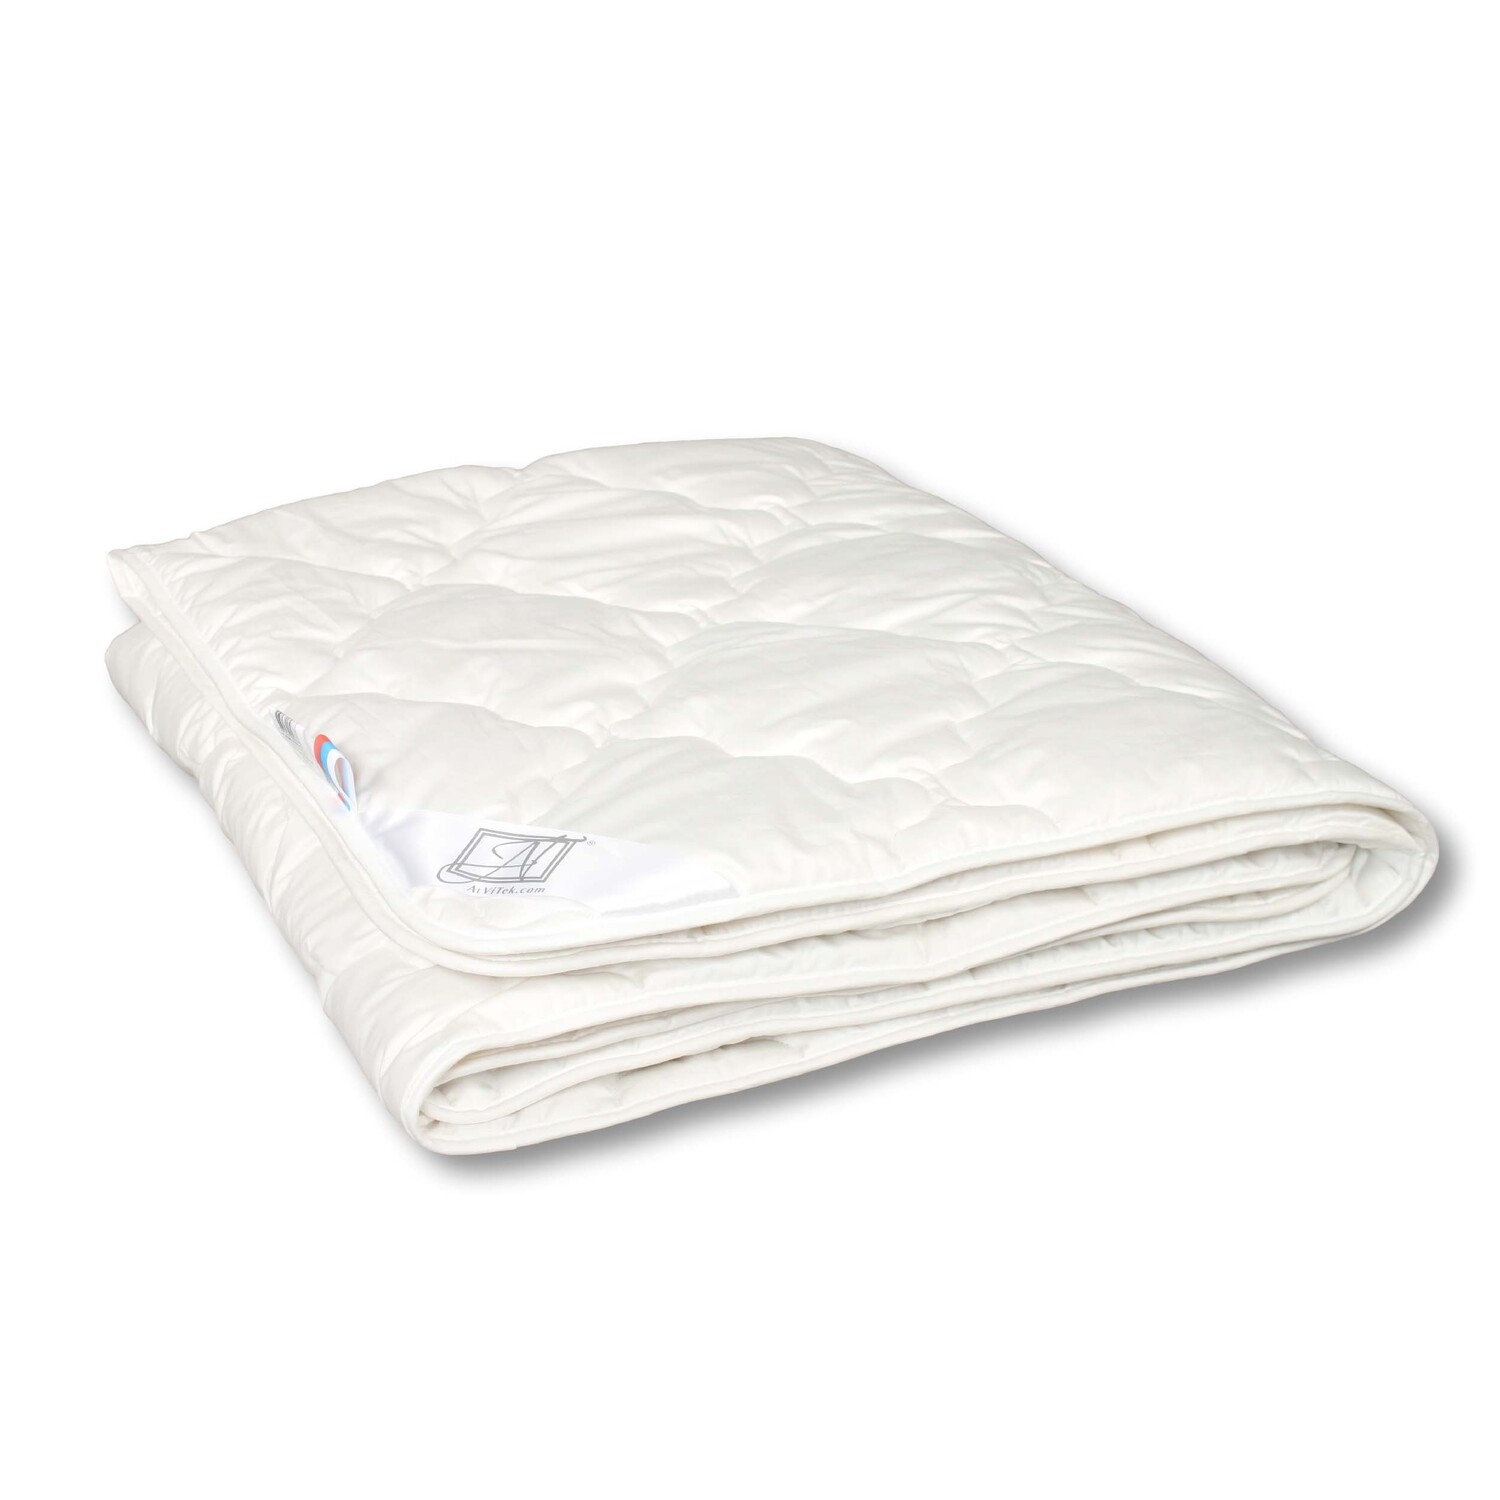 Одеяло Mexico Всесезонное (140х205 см), размер 140х205 см, цвет белый avt131580 Одеяло Mexico Всесезонное (140х205 см) - фото 1